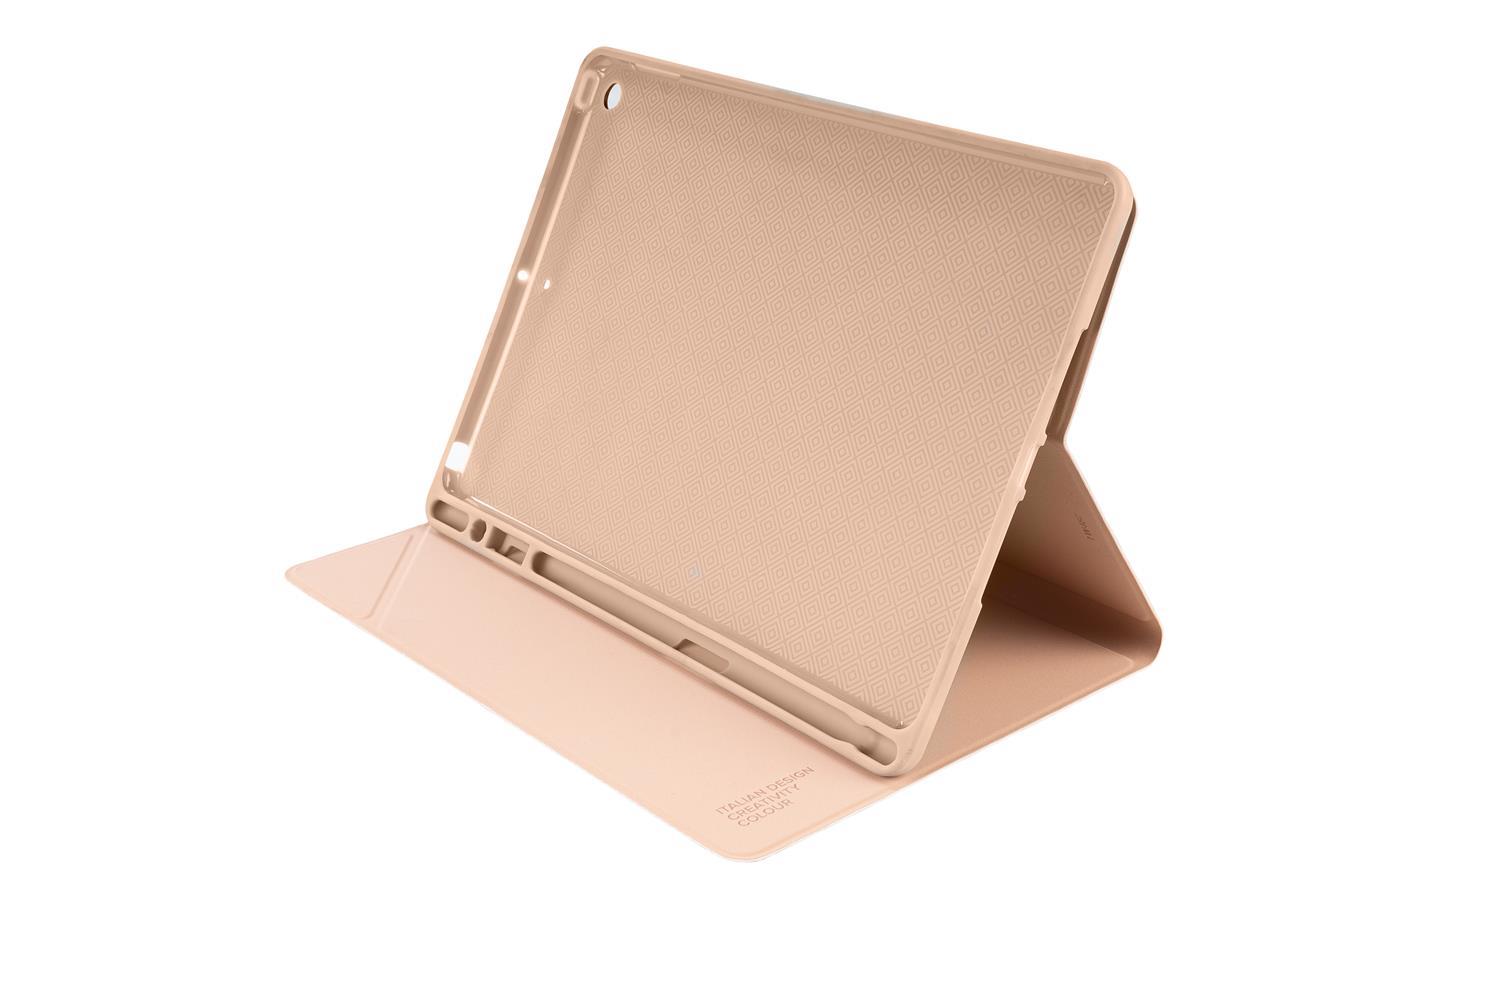 Tucano Metal Hartschalencase Hülle für Apple iPad 10,2 Zoll - Gold